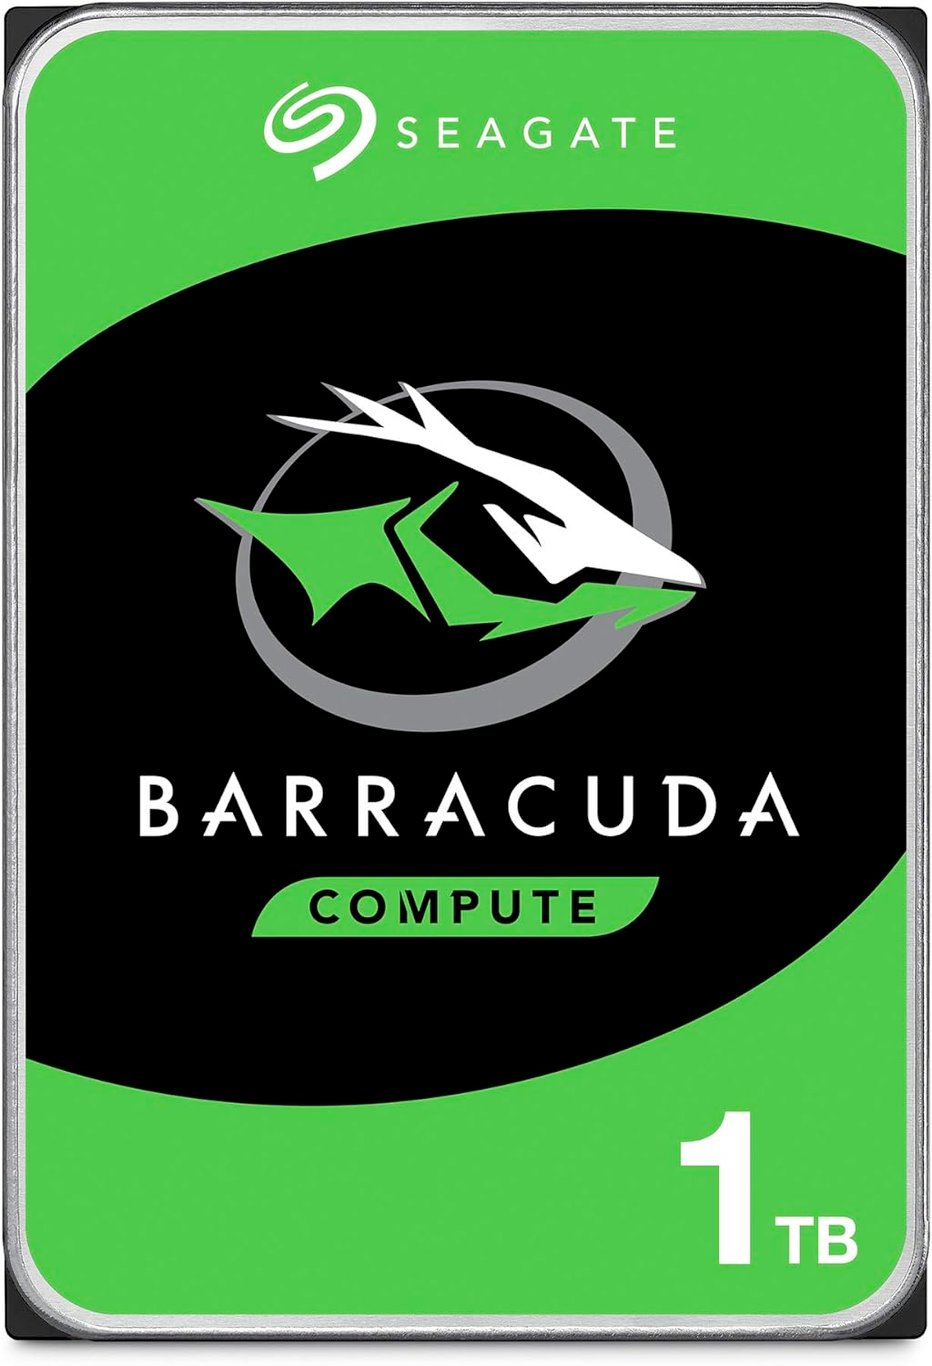 Seagate Barracuda 1TB 7200rpm 64MB 3.5" Desktop HDD (ST1000DM014)